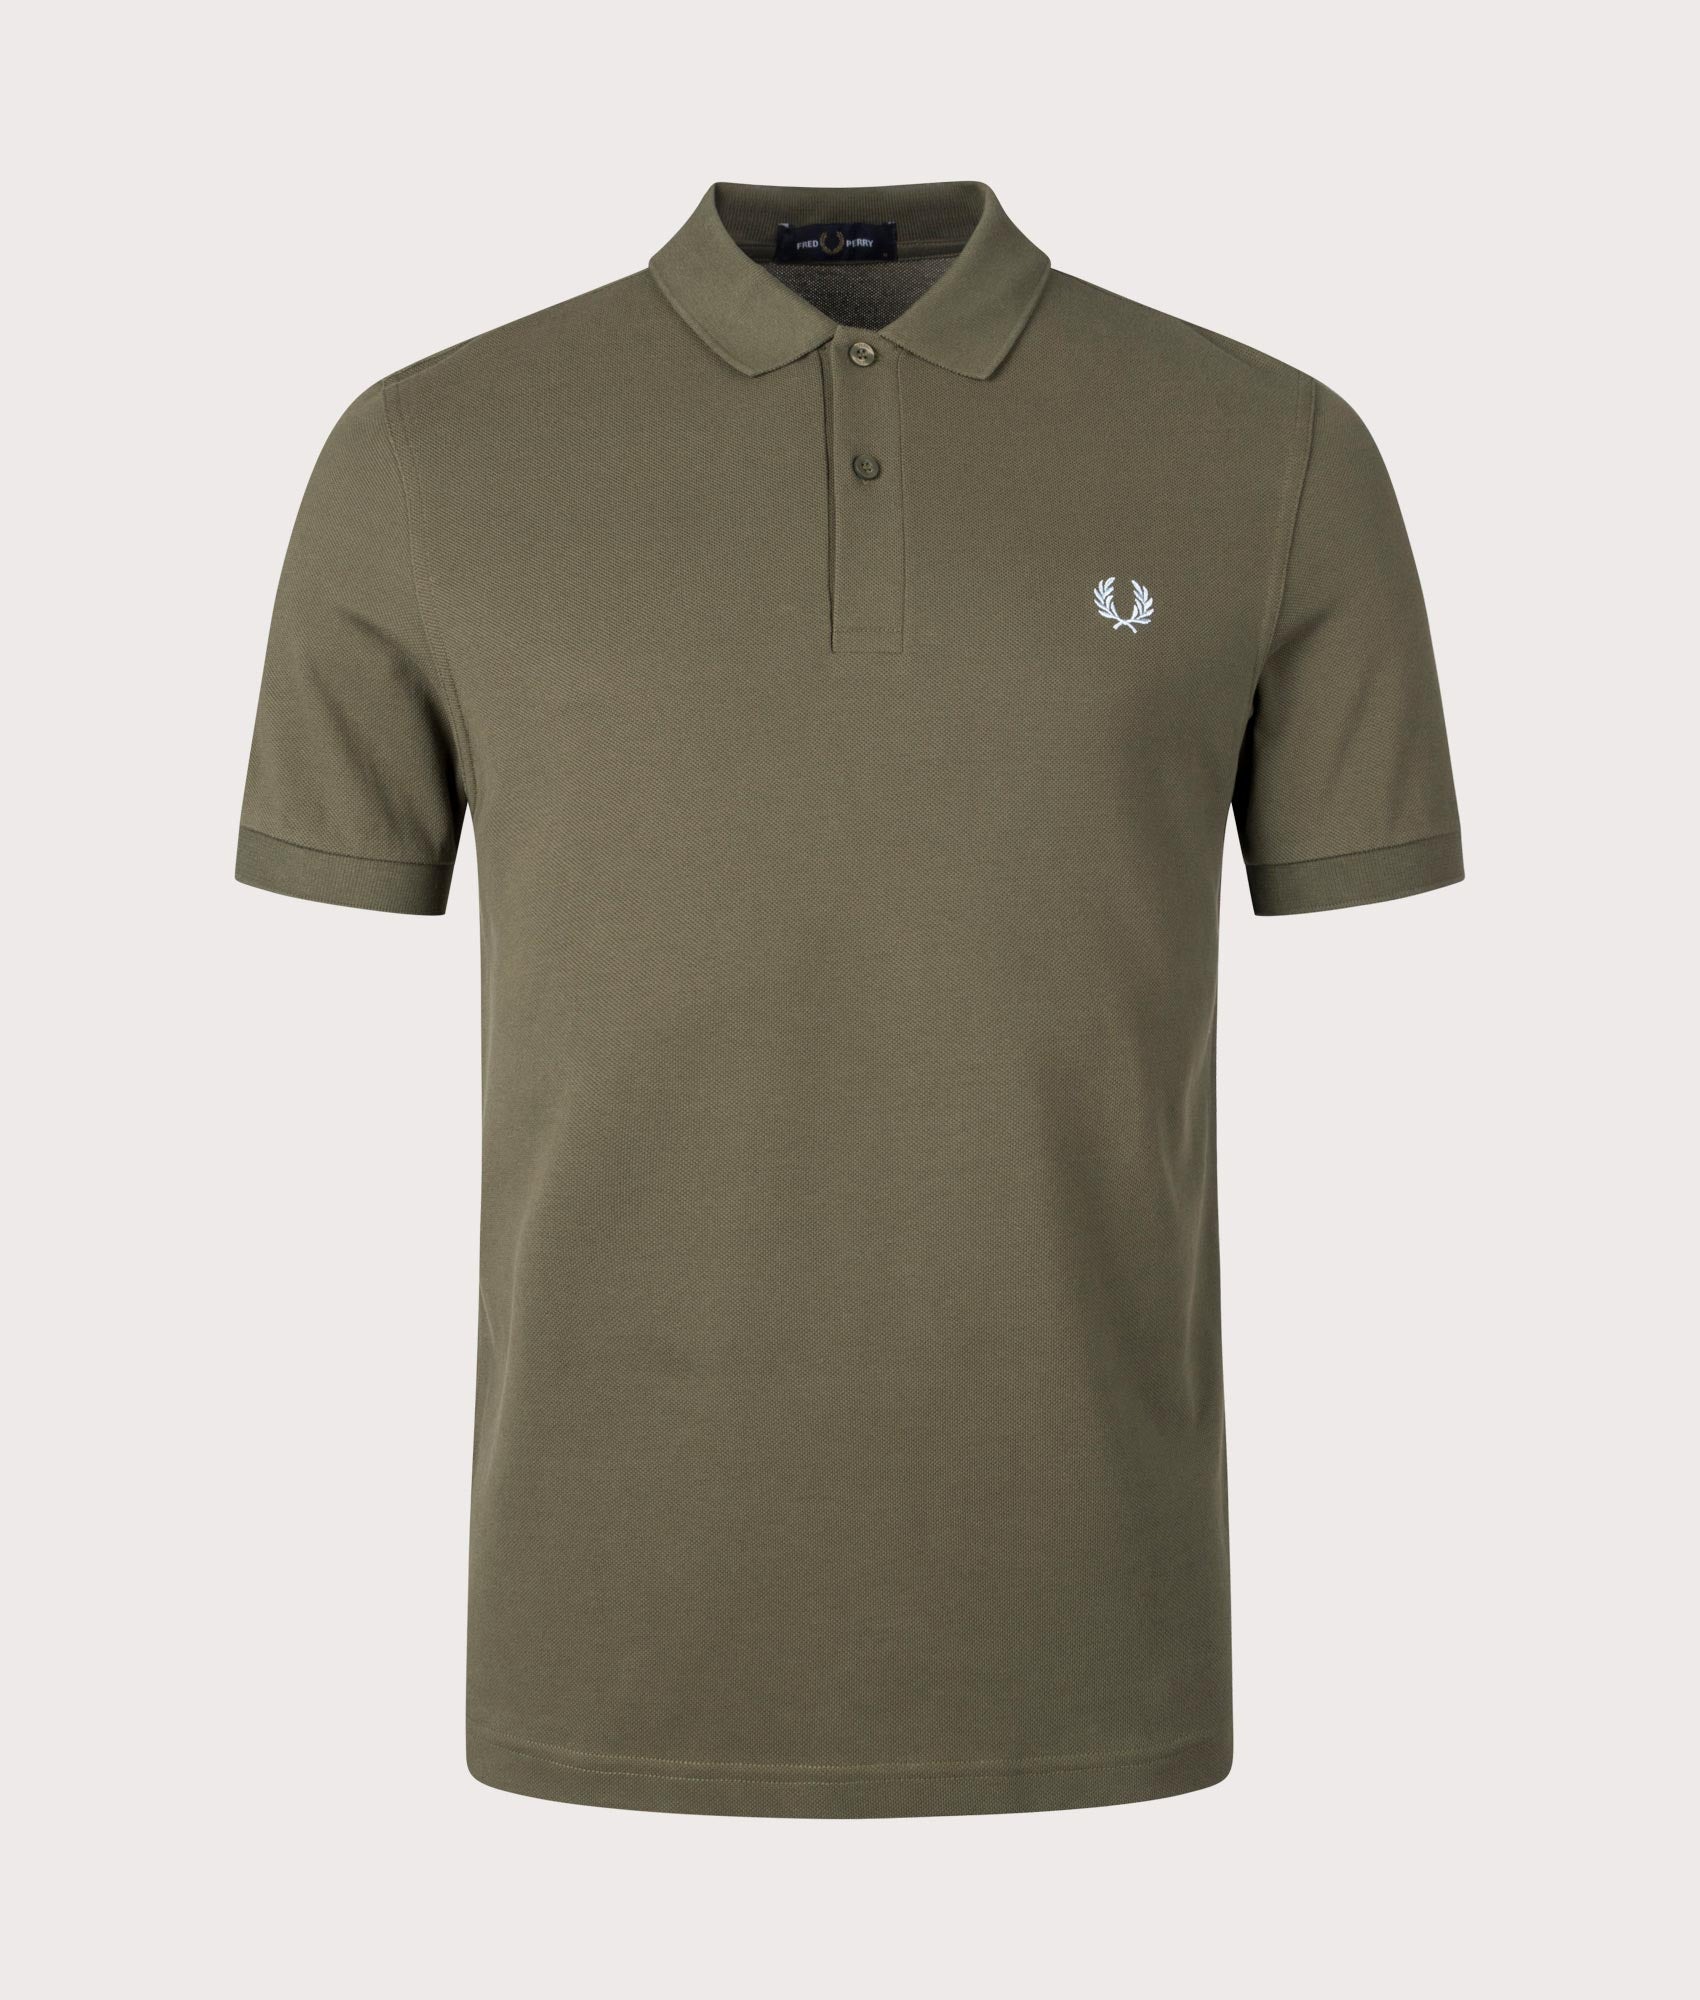 Fred Perry Mens Plain Polo Shirt - Colour: V41 Uniform Green/Light Ice - Size: Large